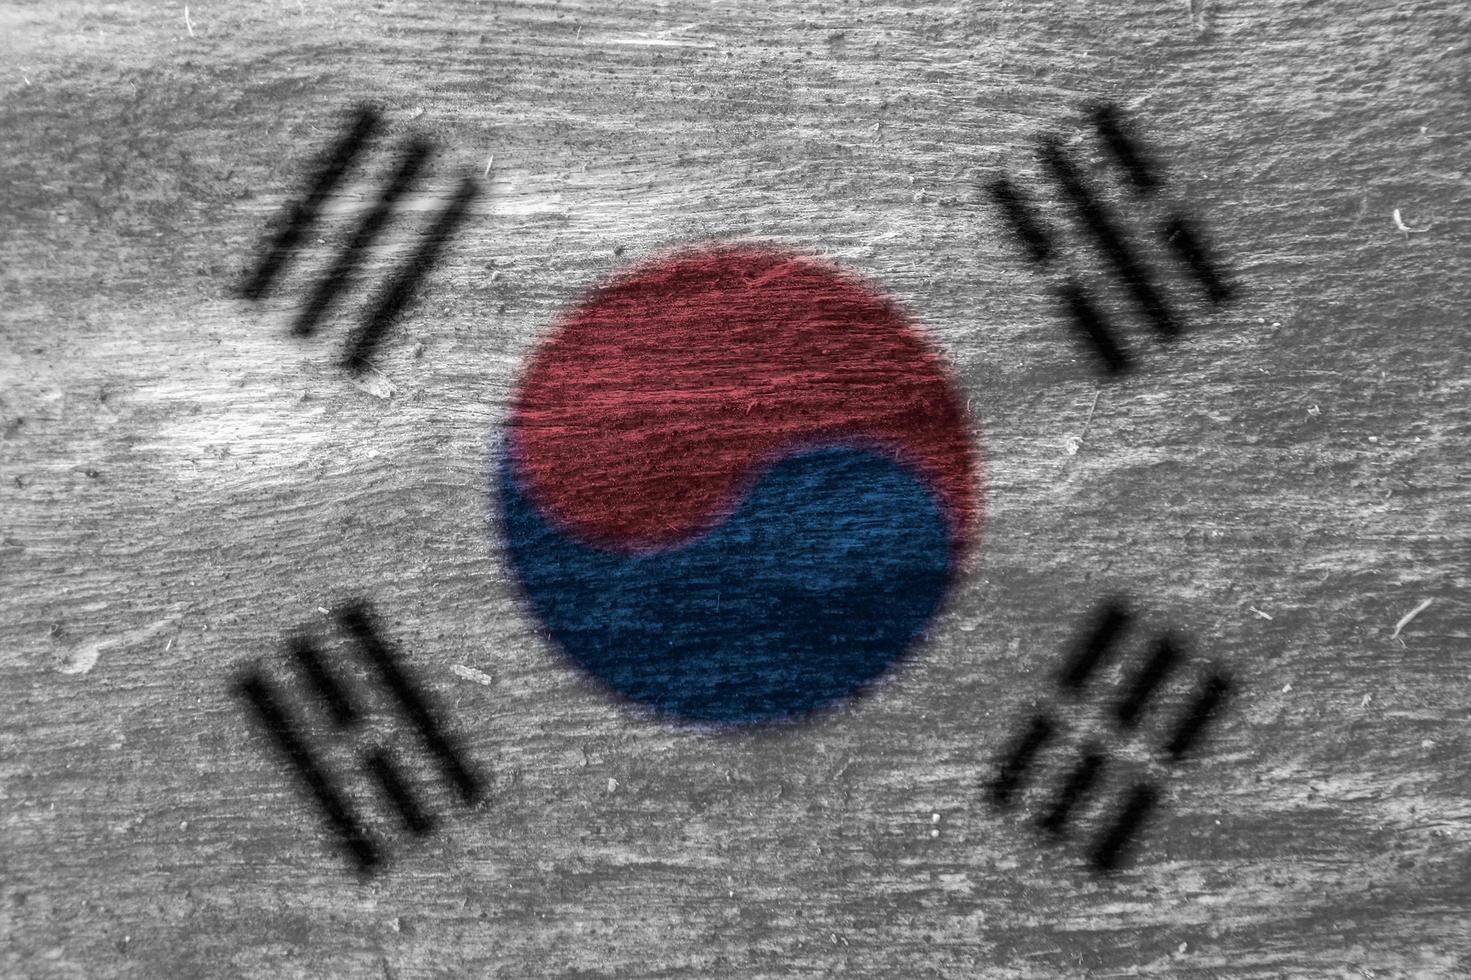 korean flag texture as a background photo